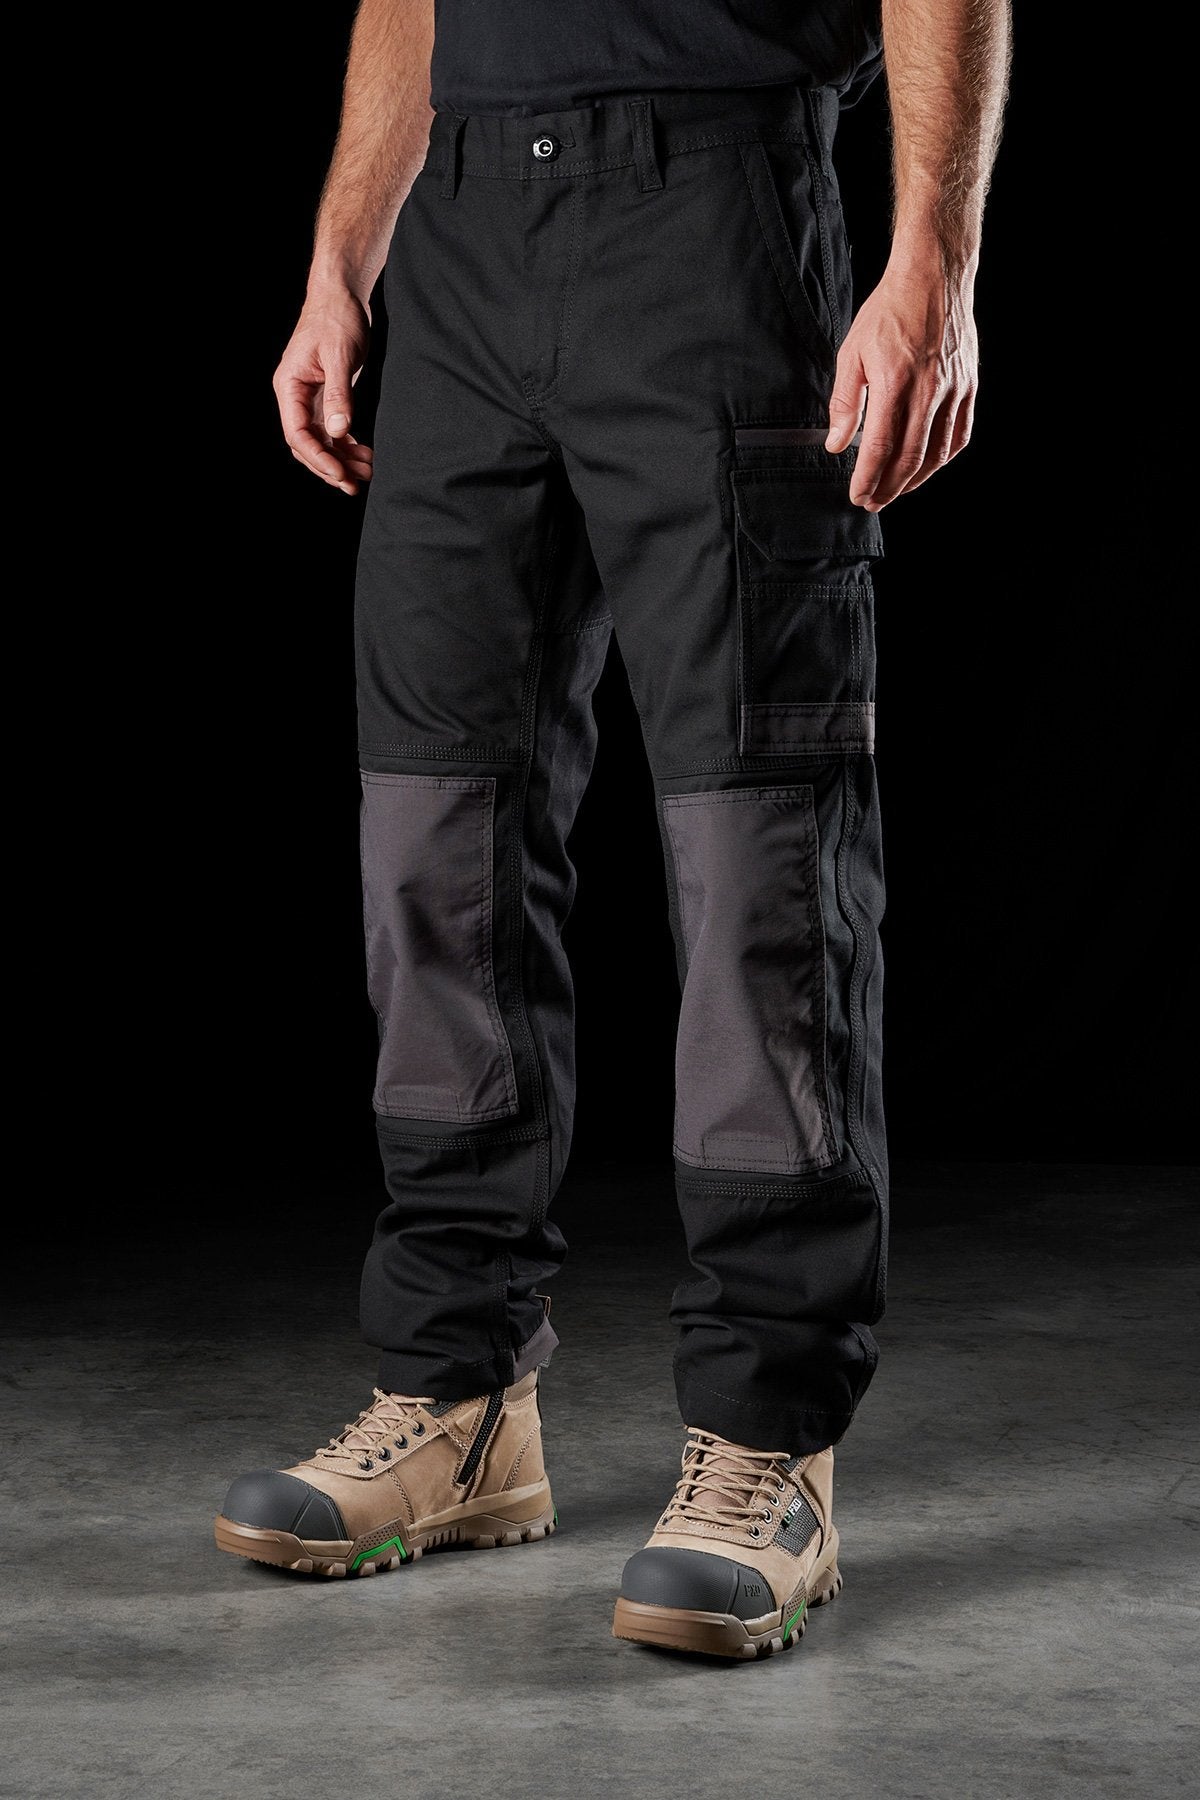 Mens Elasticated Waist Cargo Combat Work Trousers Joggers Pocket Cuffed  Pants US  eBay